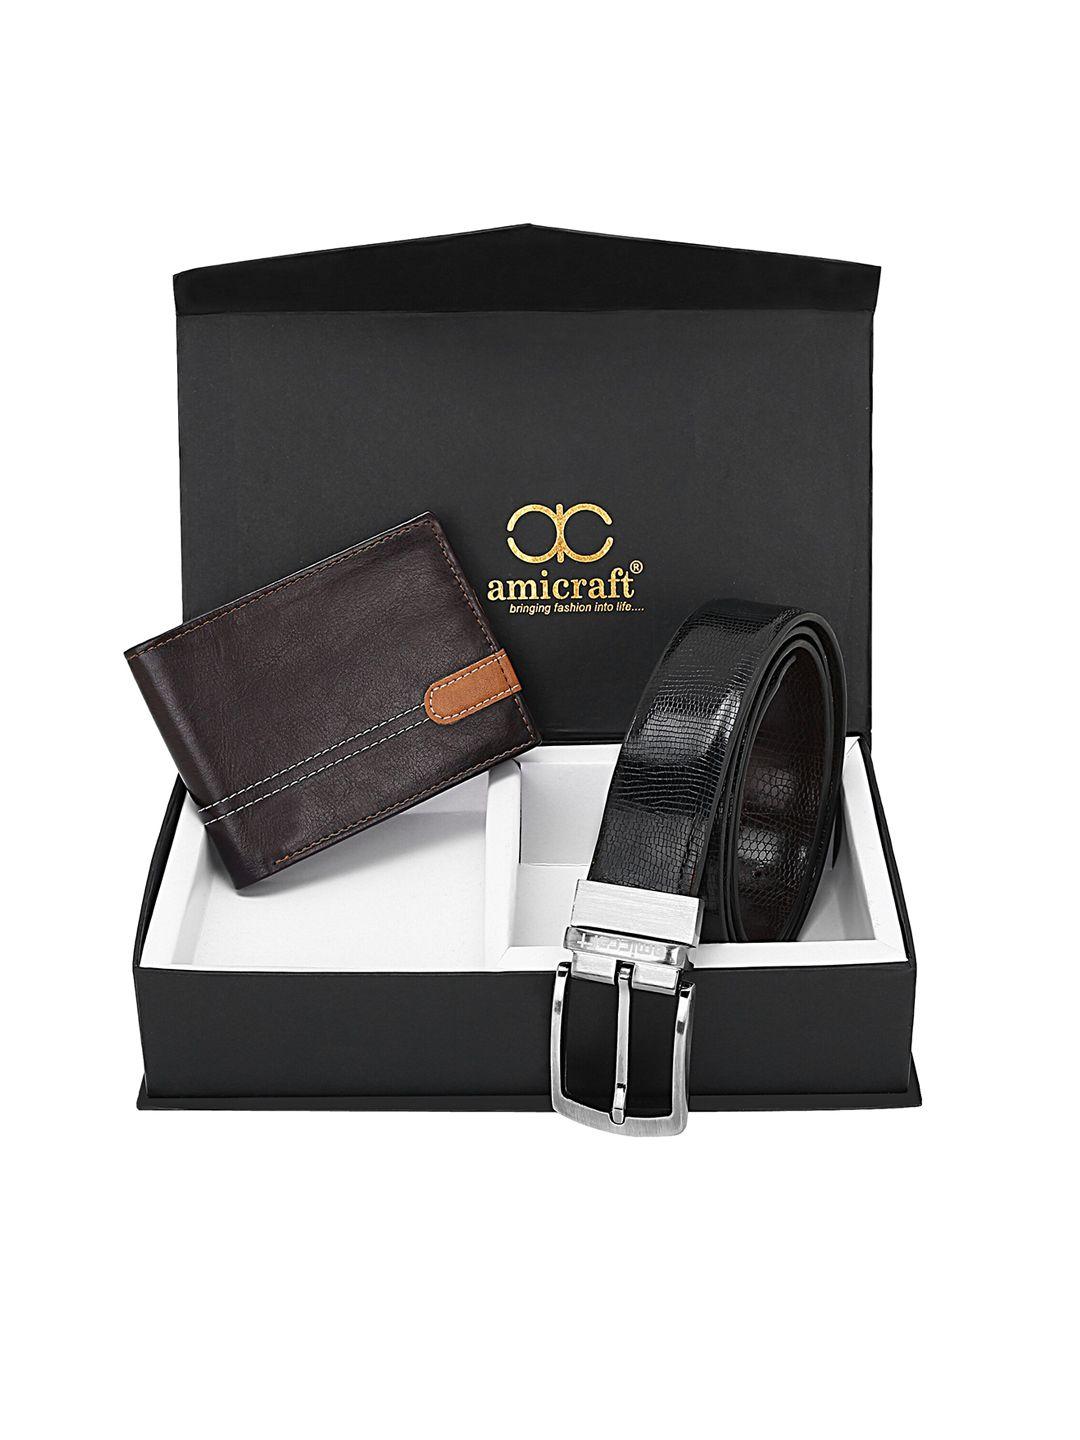 amicraft men black wallet & belt accessory gift set